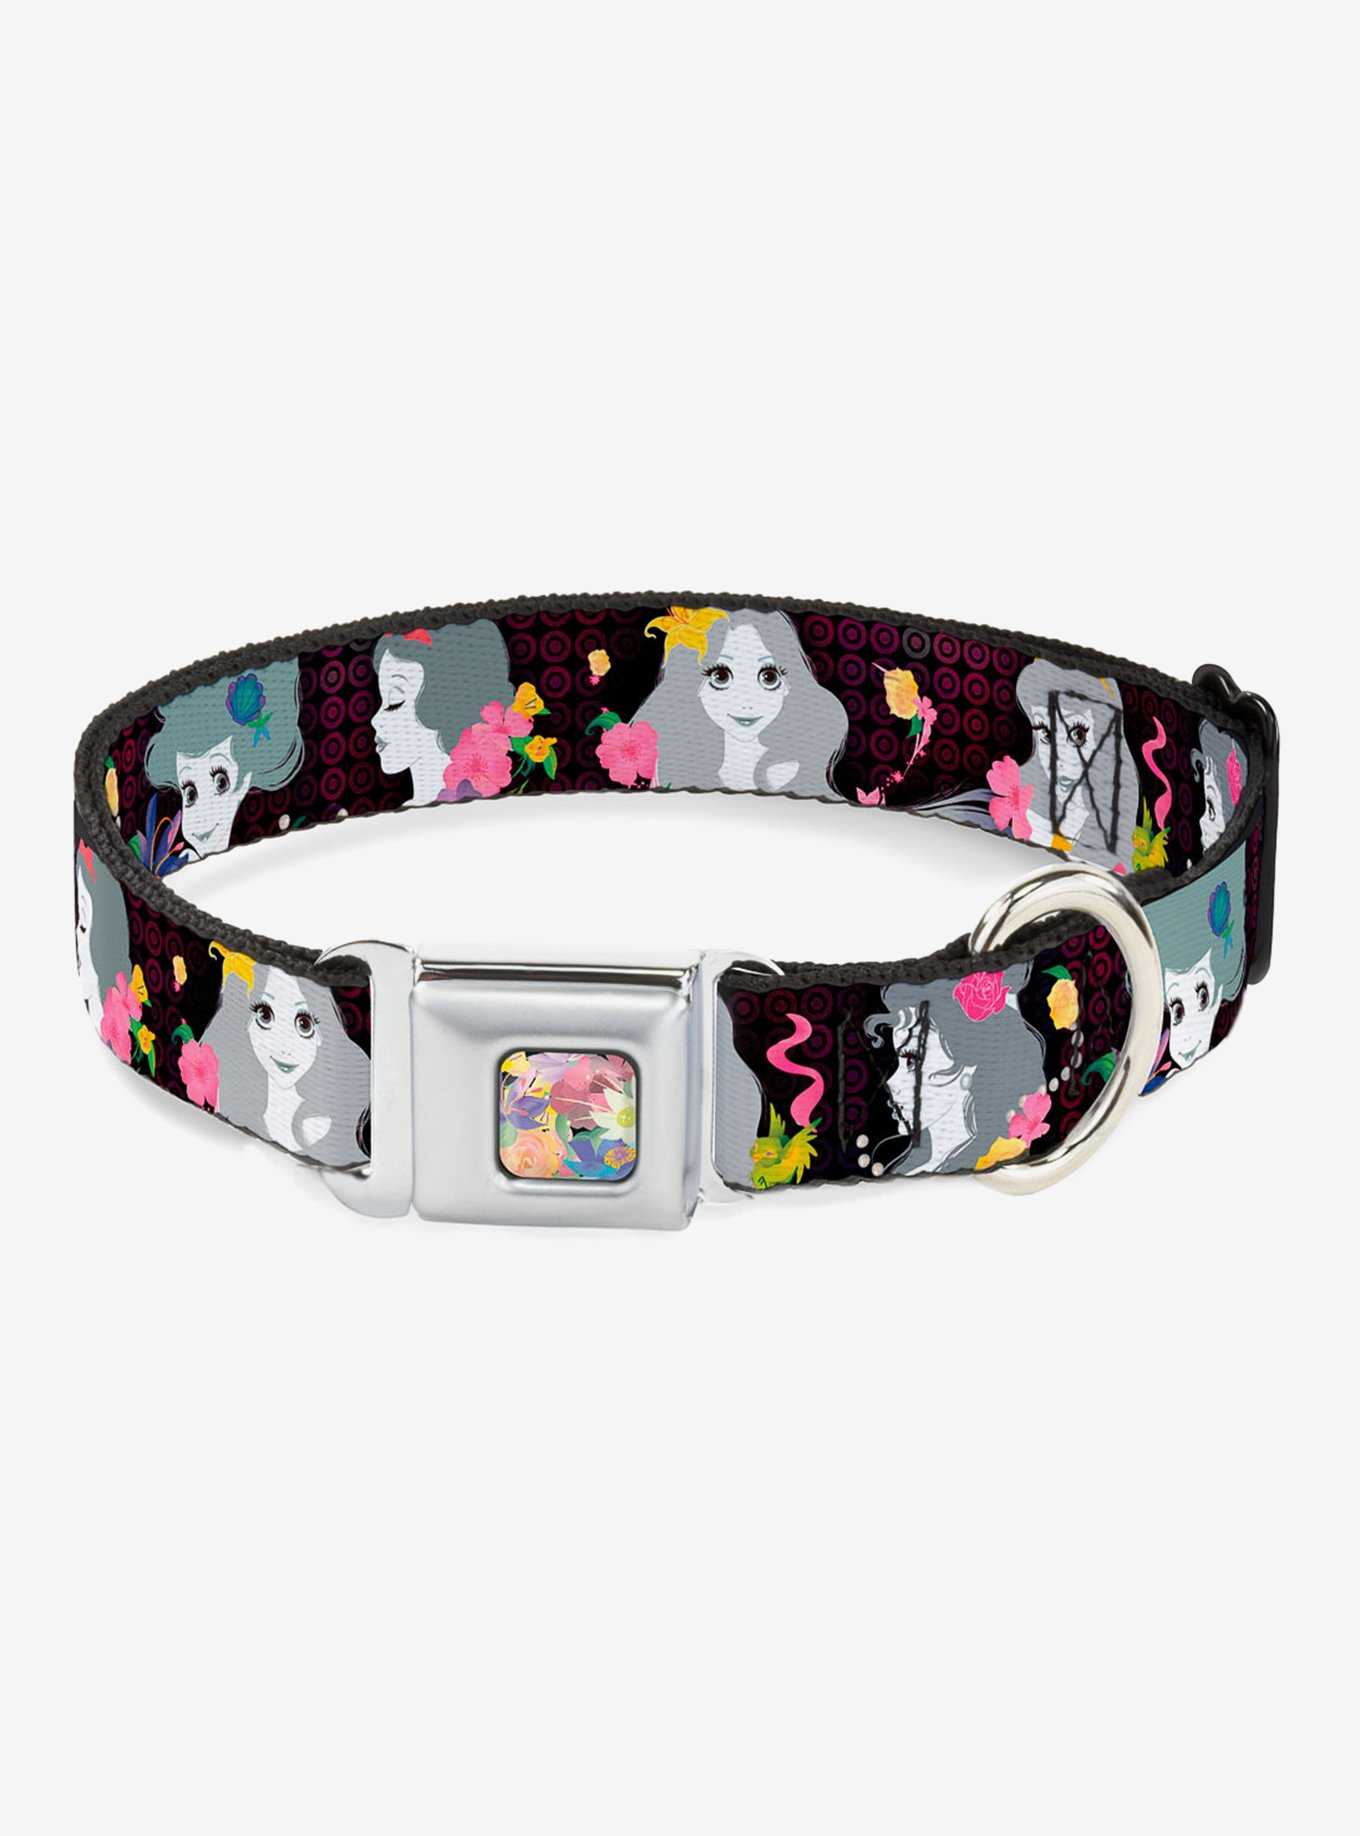 Disney Princess Silhouettes Seatbelt Buckle Dog Collar, , hi-res